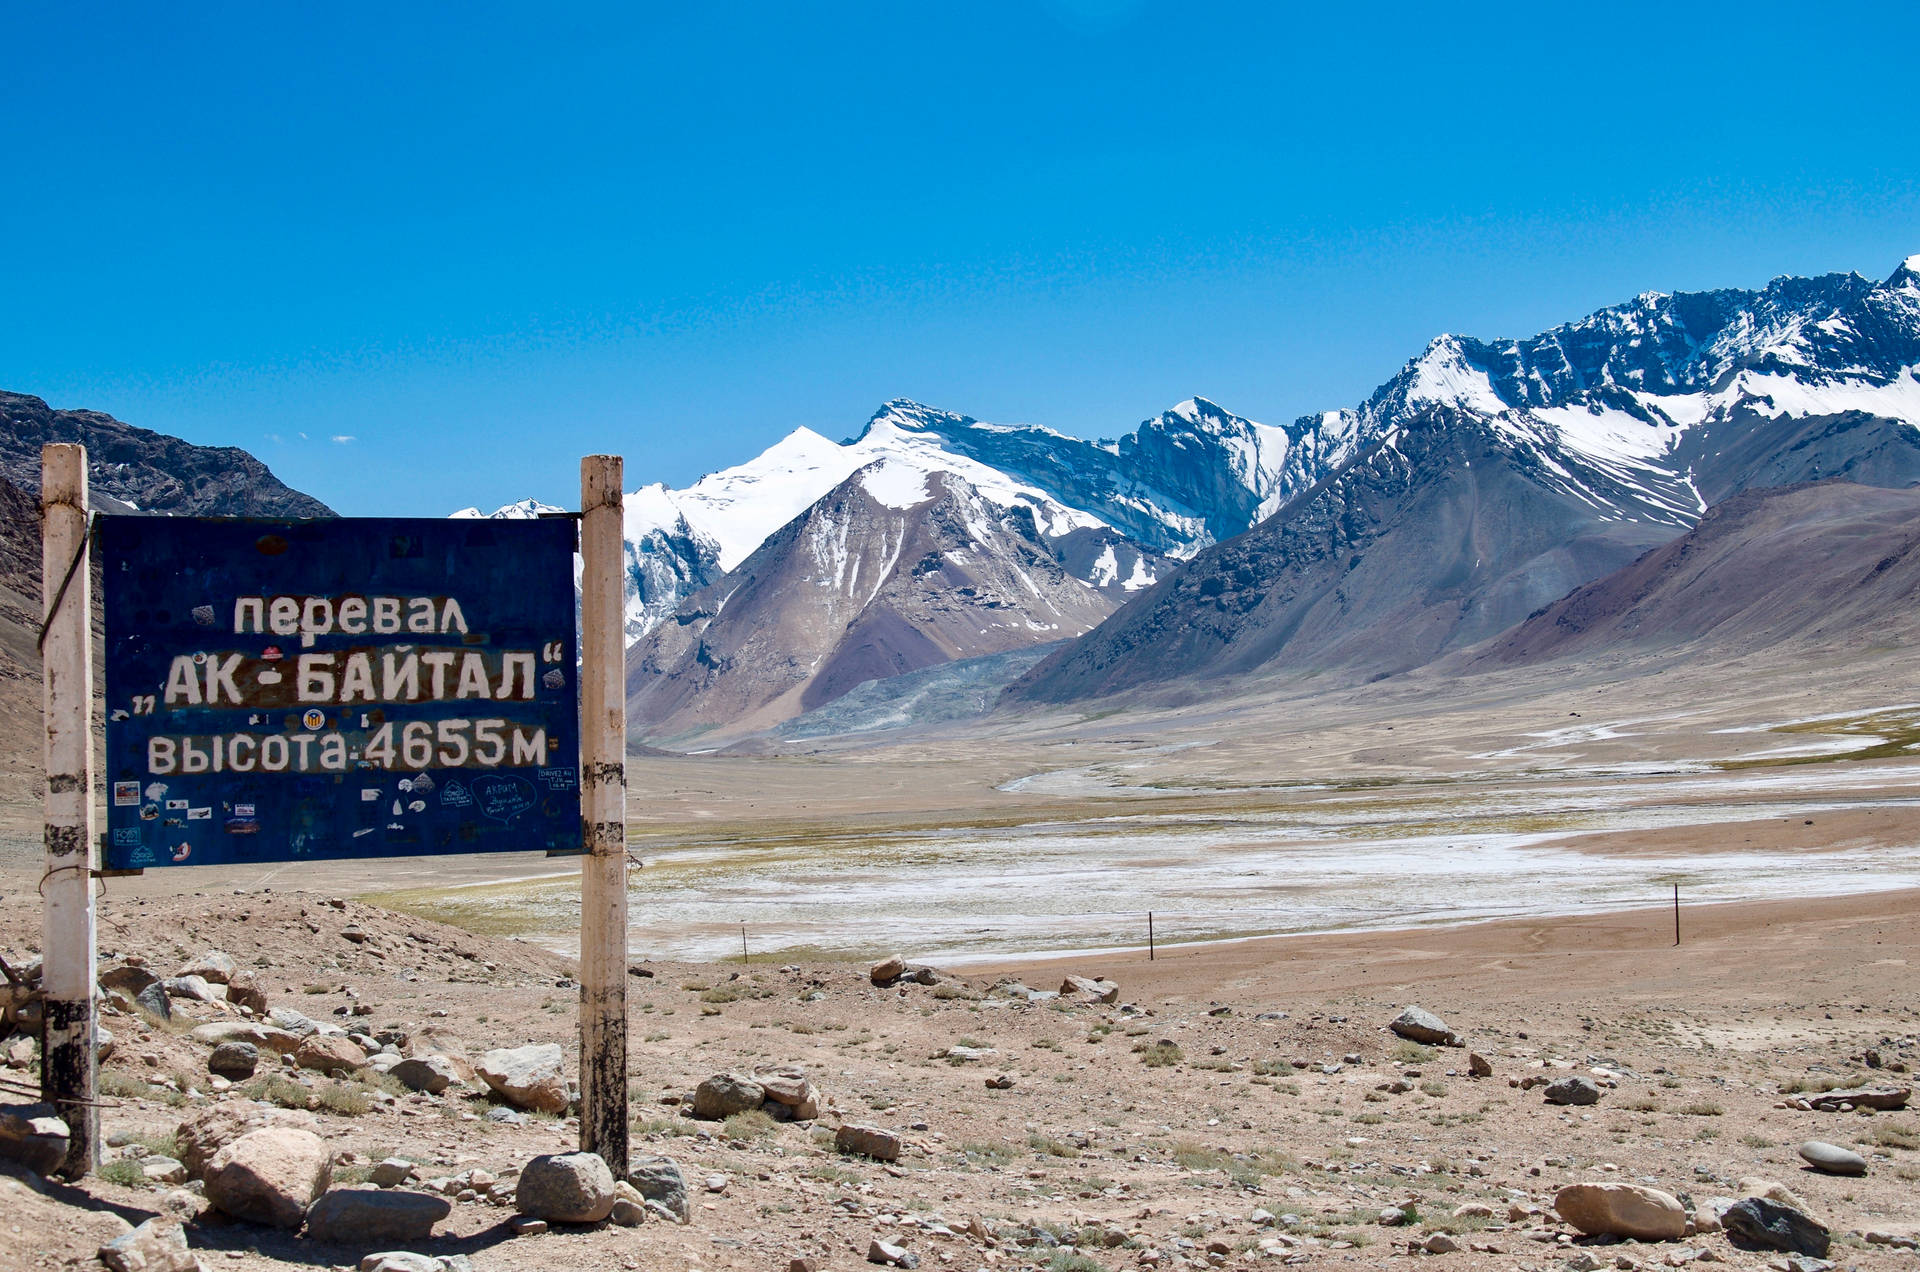 Ak-baital Pass In Tajikistan Background